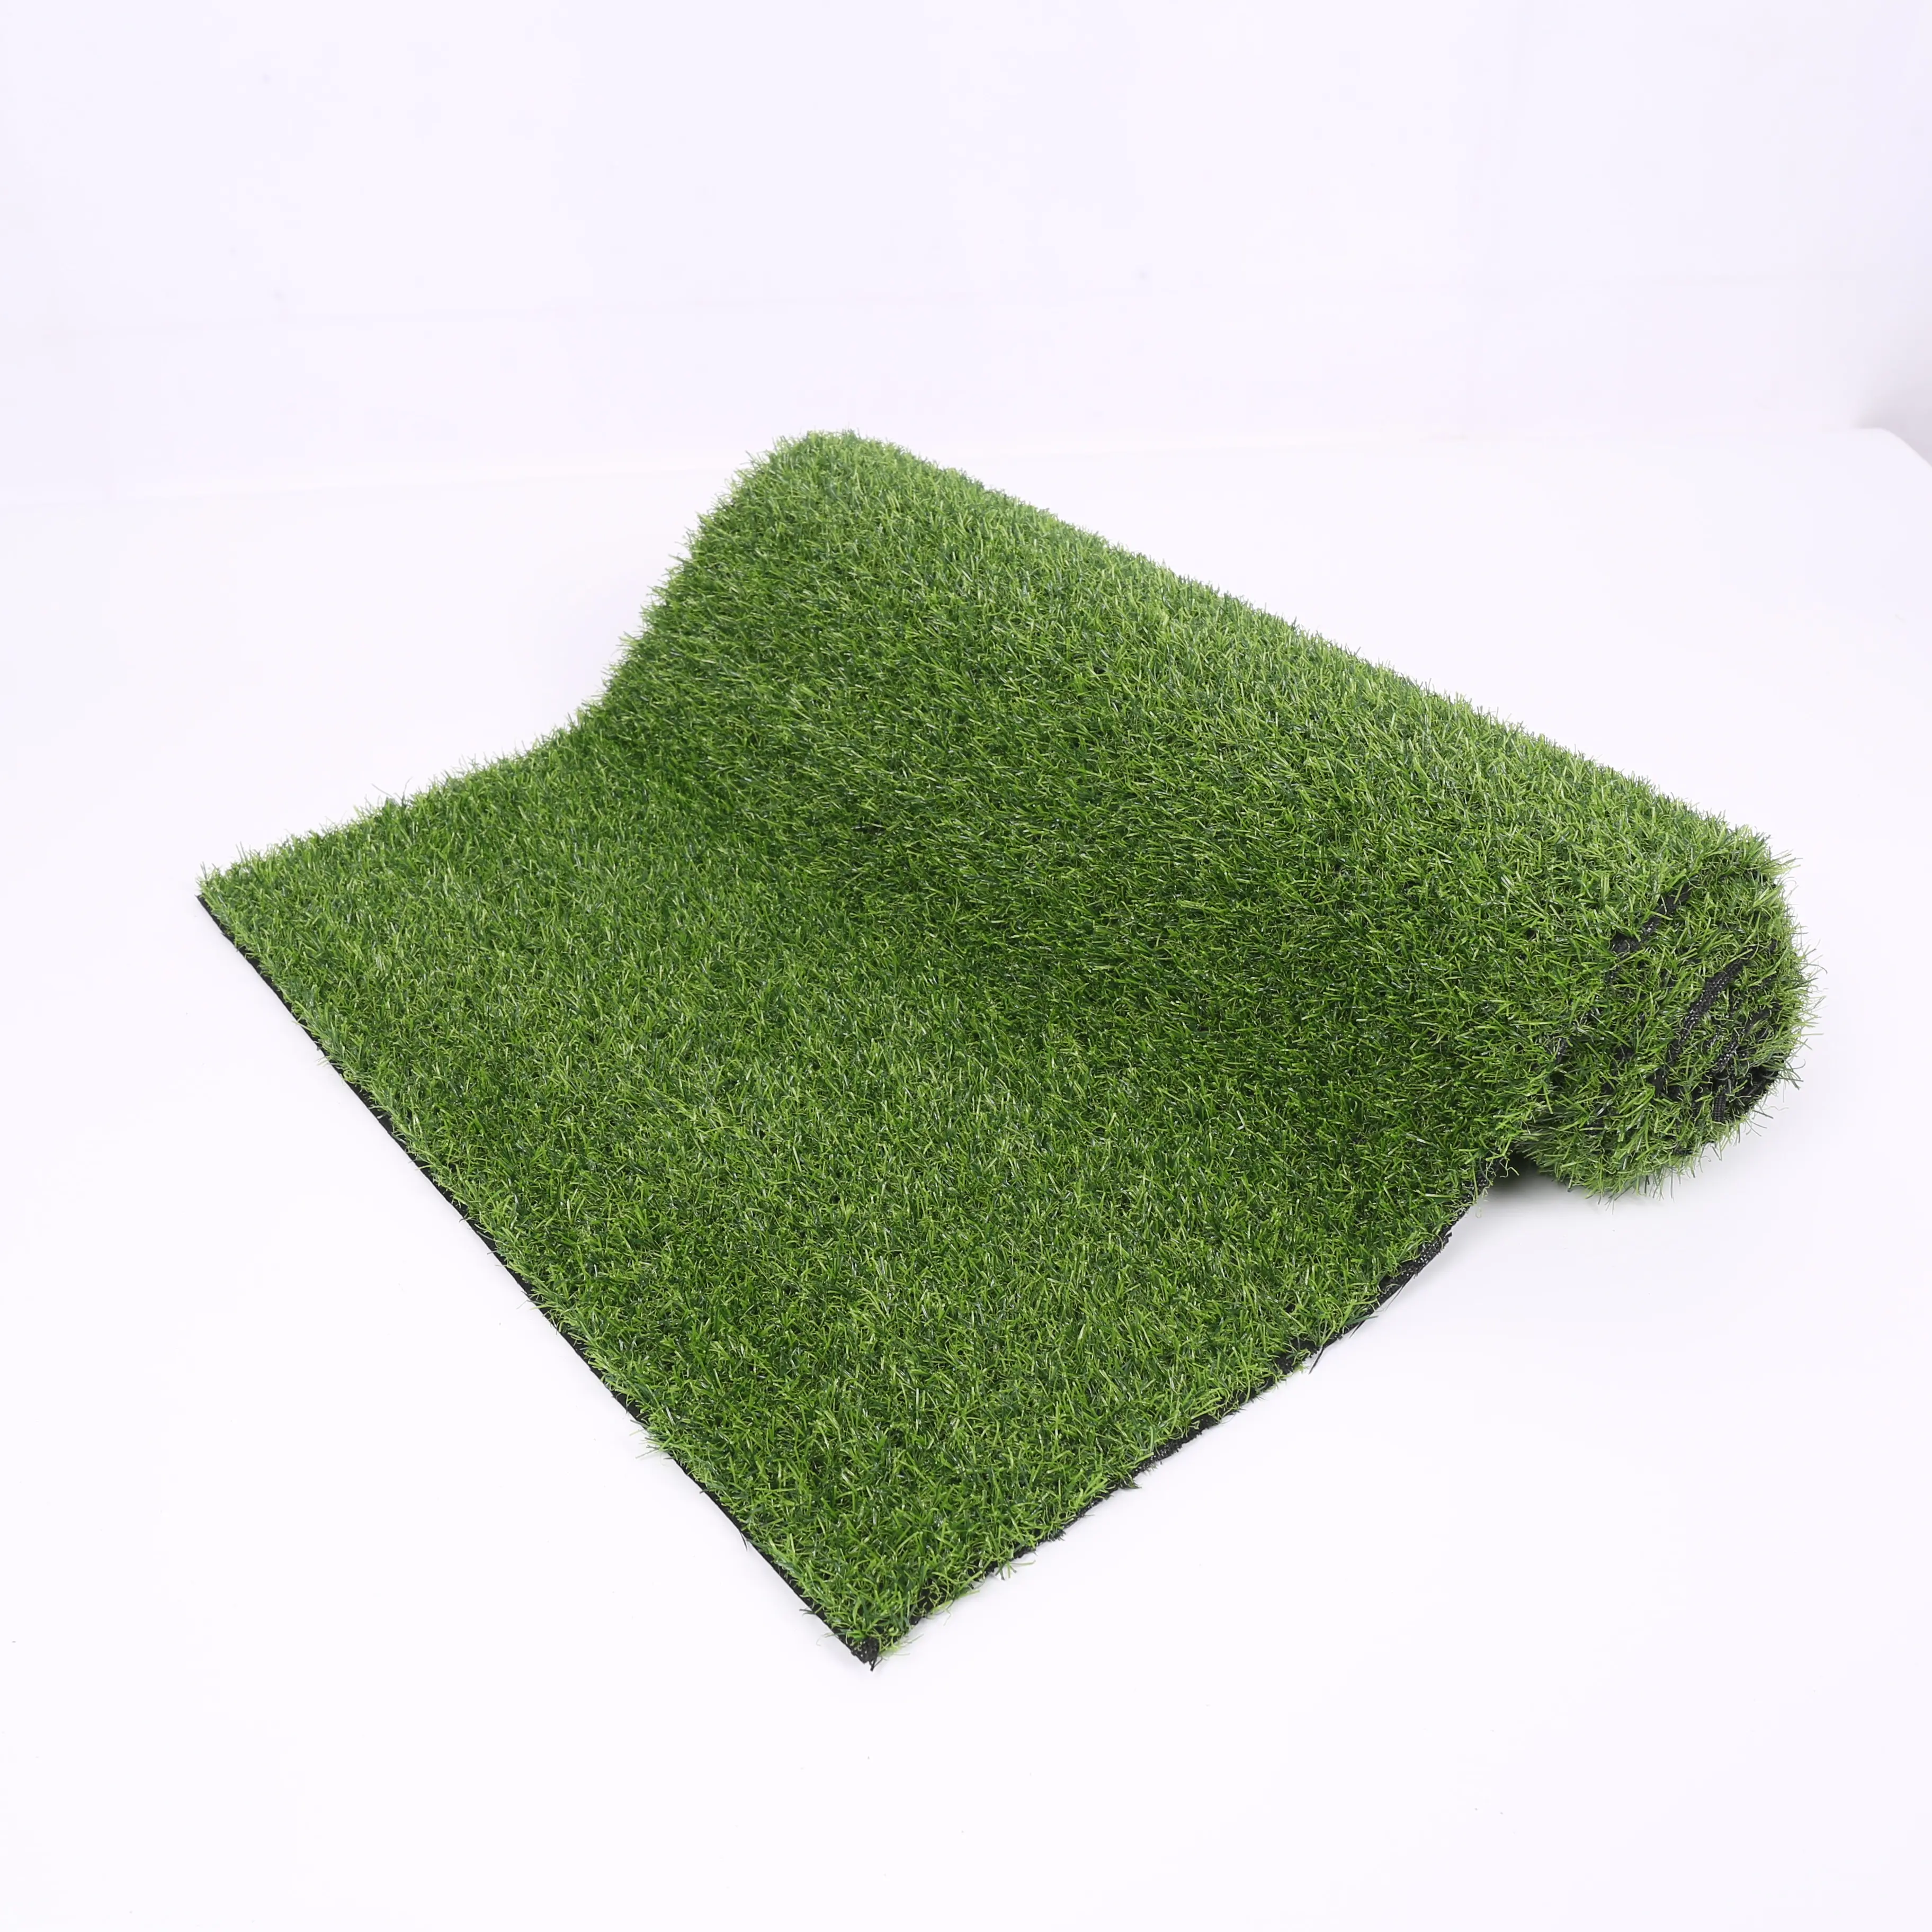 Modern Design Green Synthetic Plastic Artificial Grass For Backdrop Flooring Decoration Landscape Balcony Garden Natural Turf